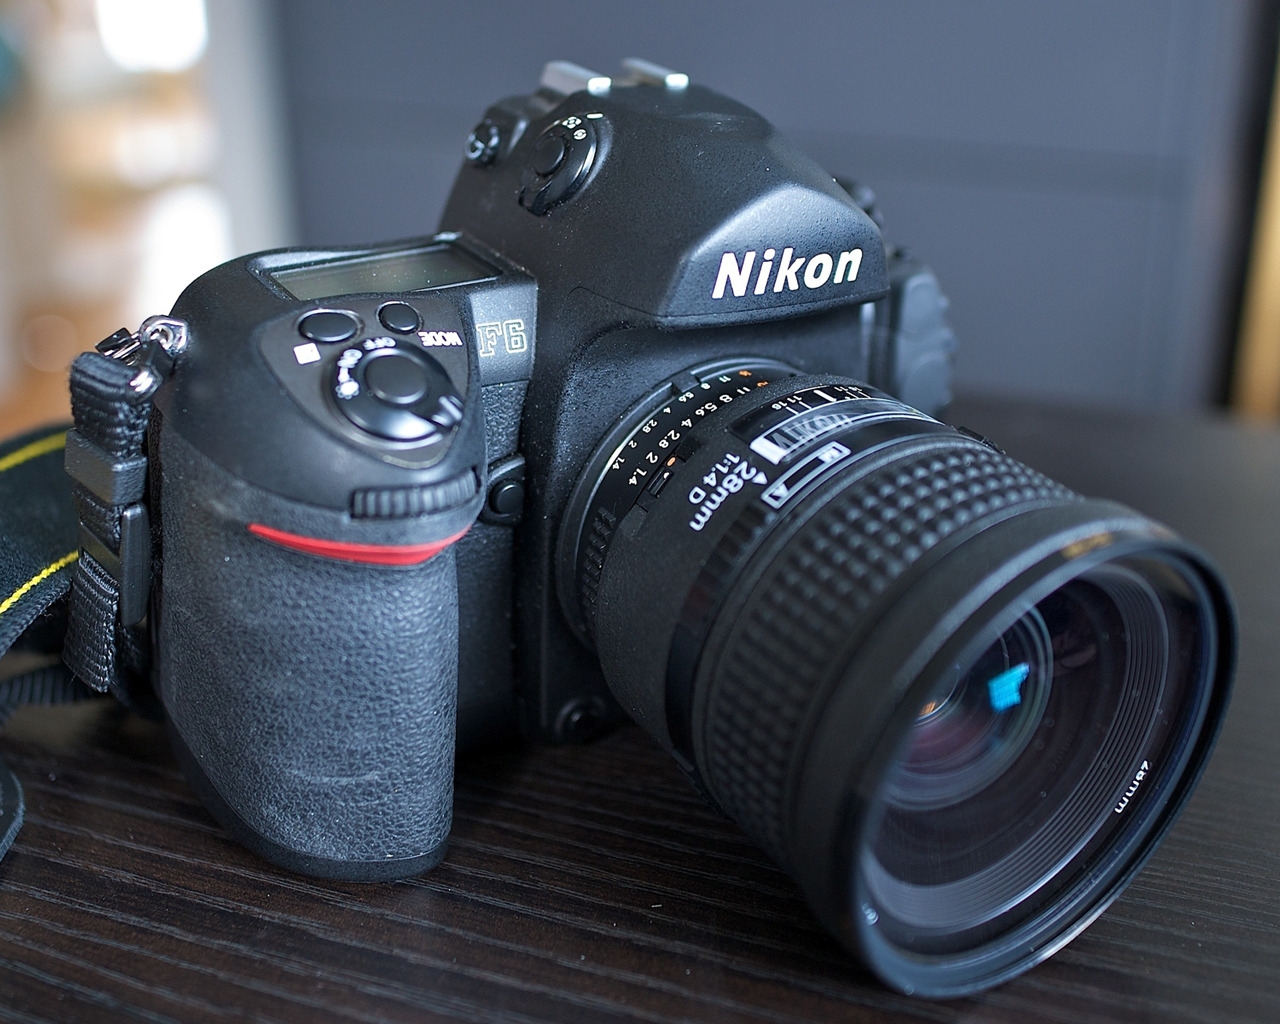 Nikon F6 for 1280 x 1024 resolution